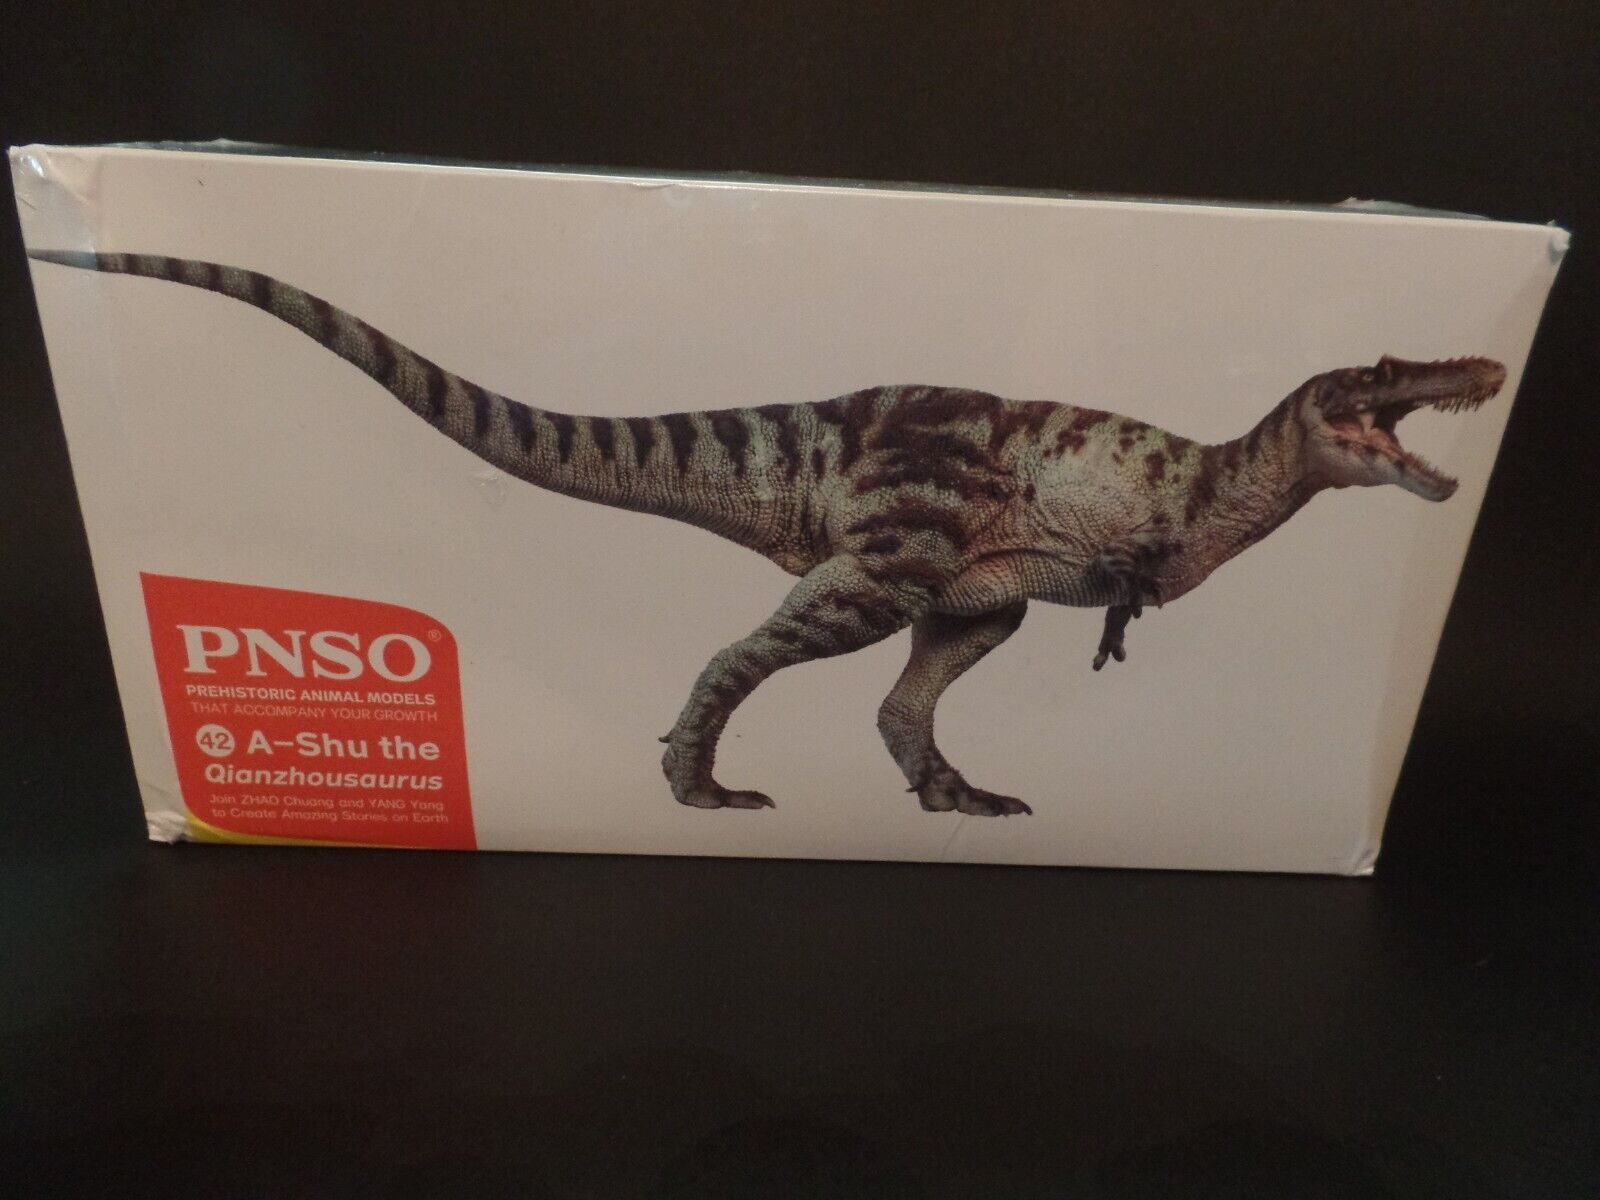 PNSO 42 A-Shu Qianzhousaurus Prehistoric Dinosaur Model Collectible - Education